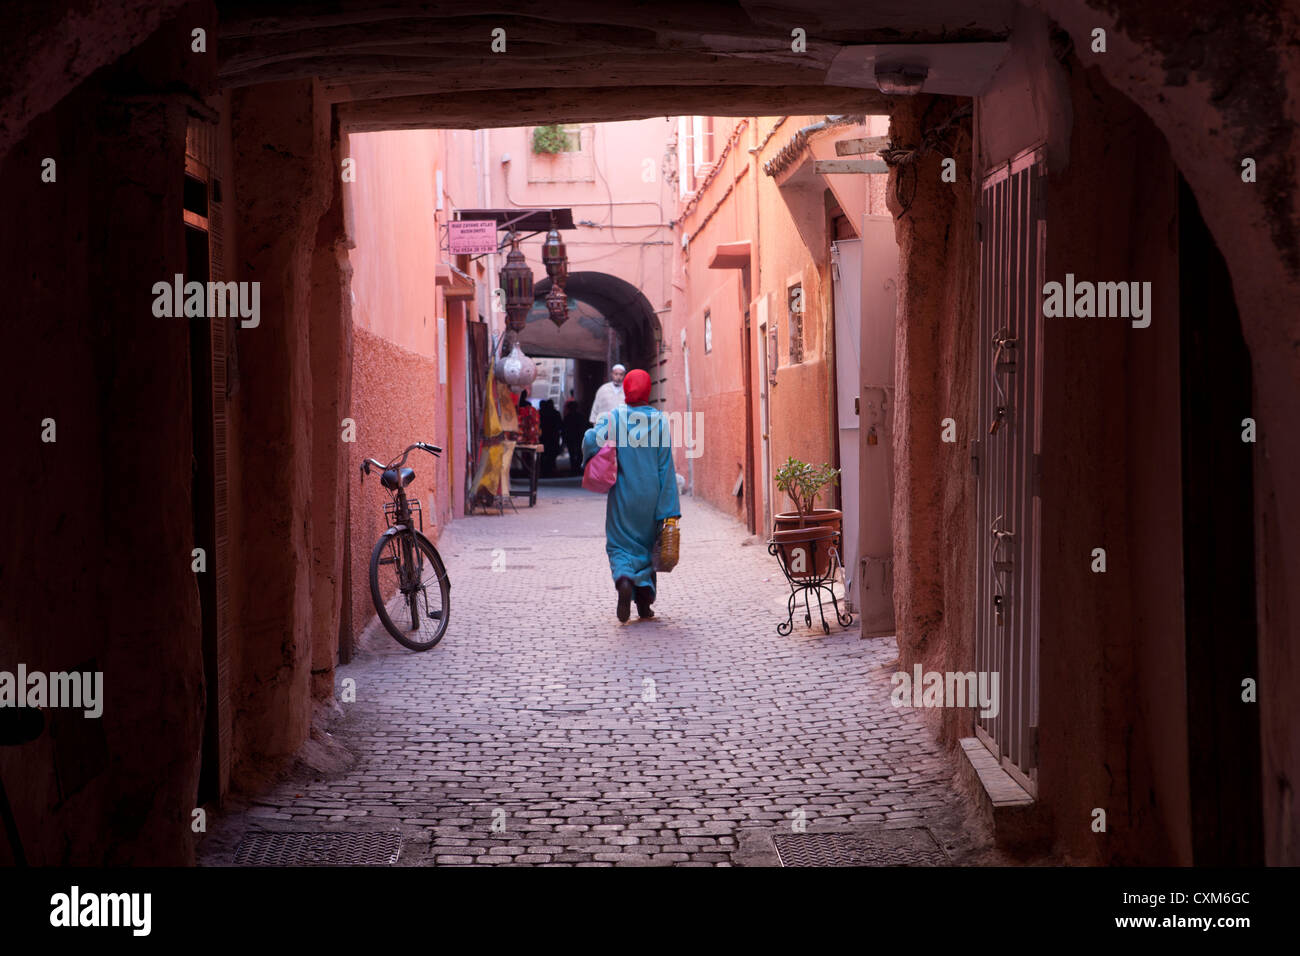 Pedestrian street scene, Marrakech, Morocco Stock Photo